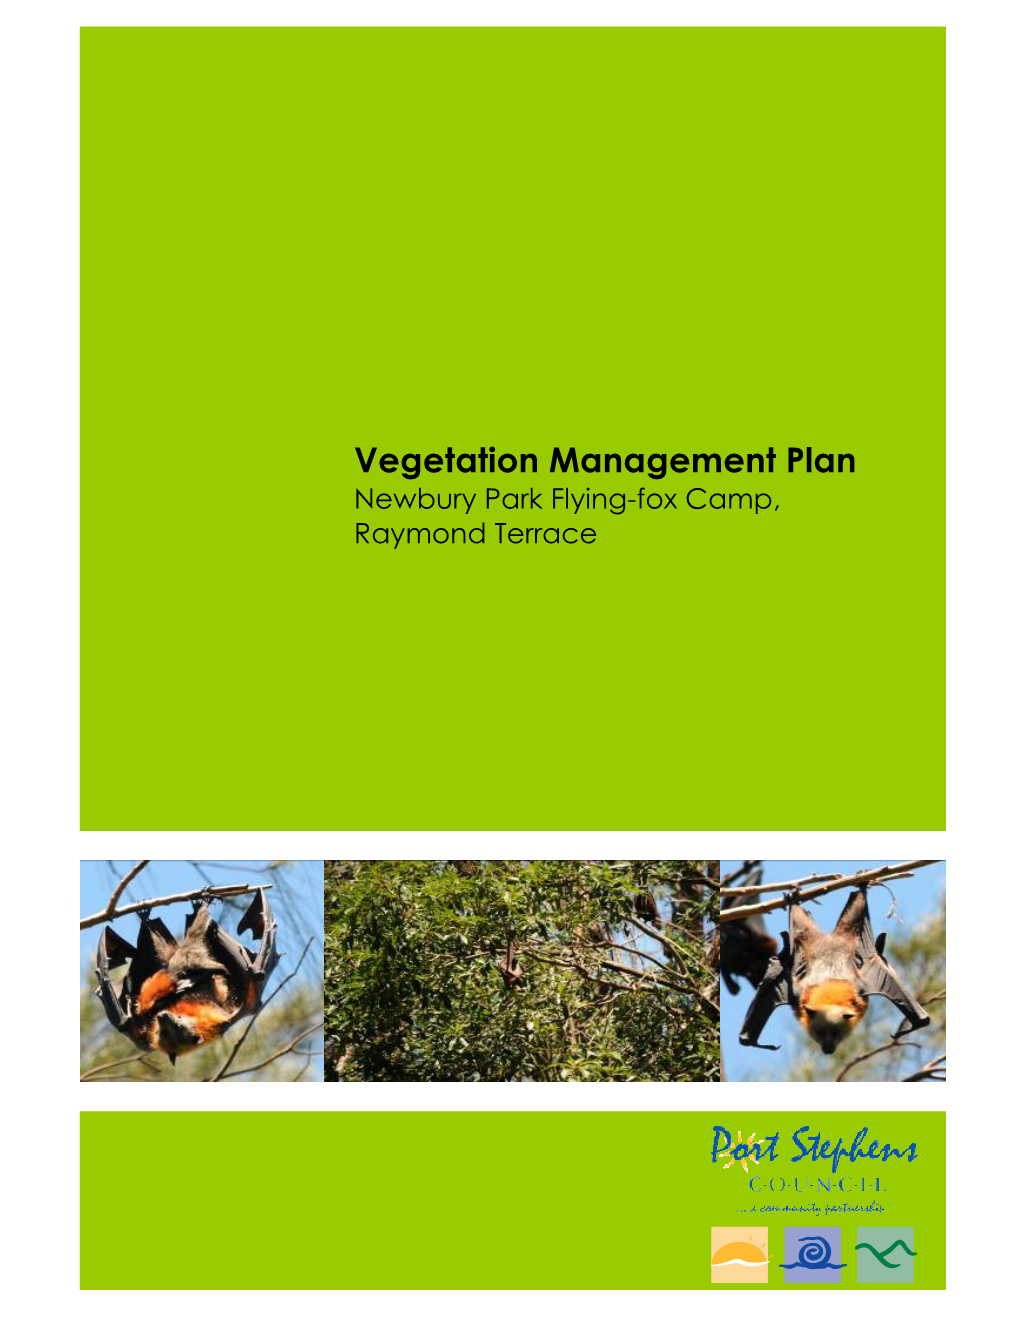 Vegetation Management Plan for Newbury Park